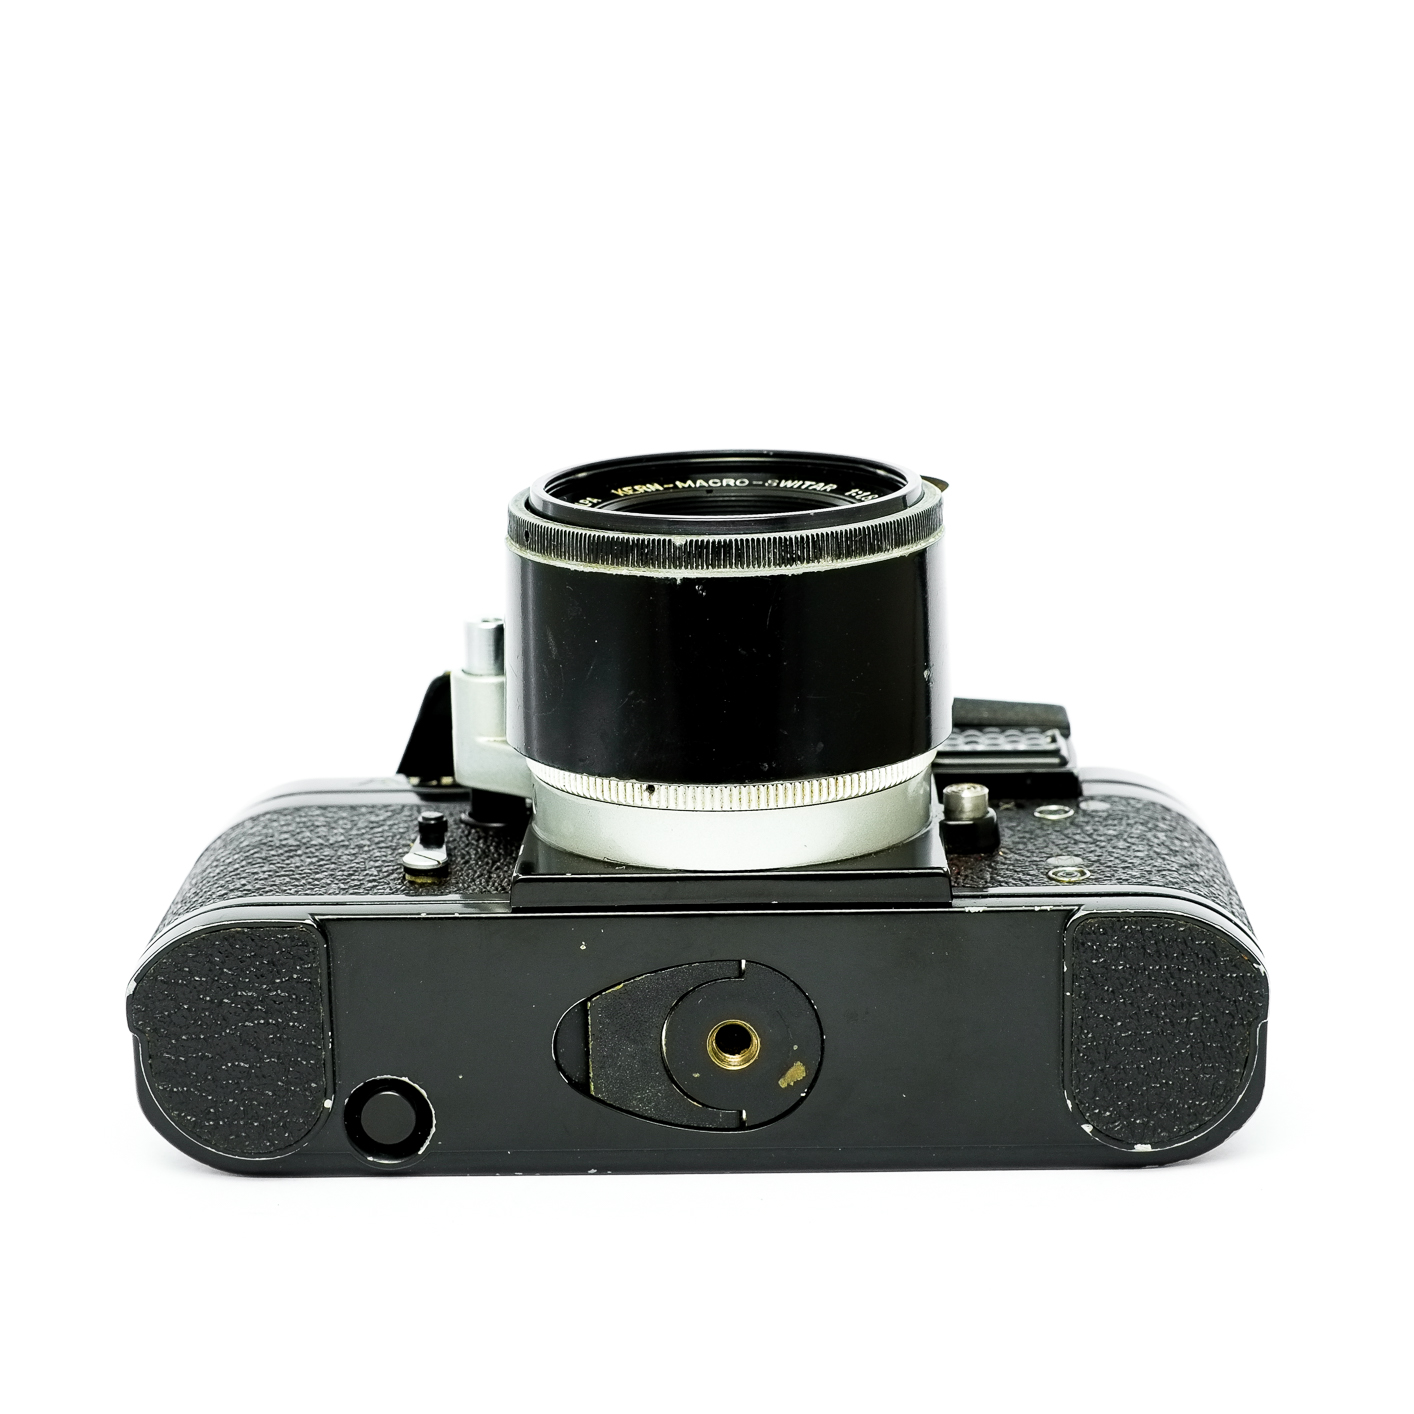 ALPA 6c Black + 50mm f1.8 Kern-Macro-Switar + Case - The Classic 